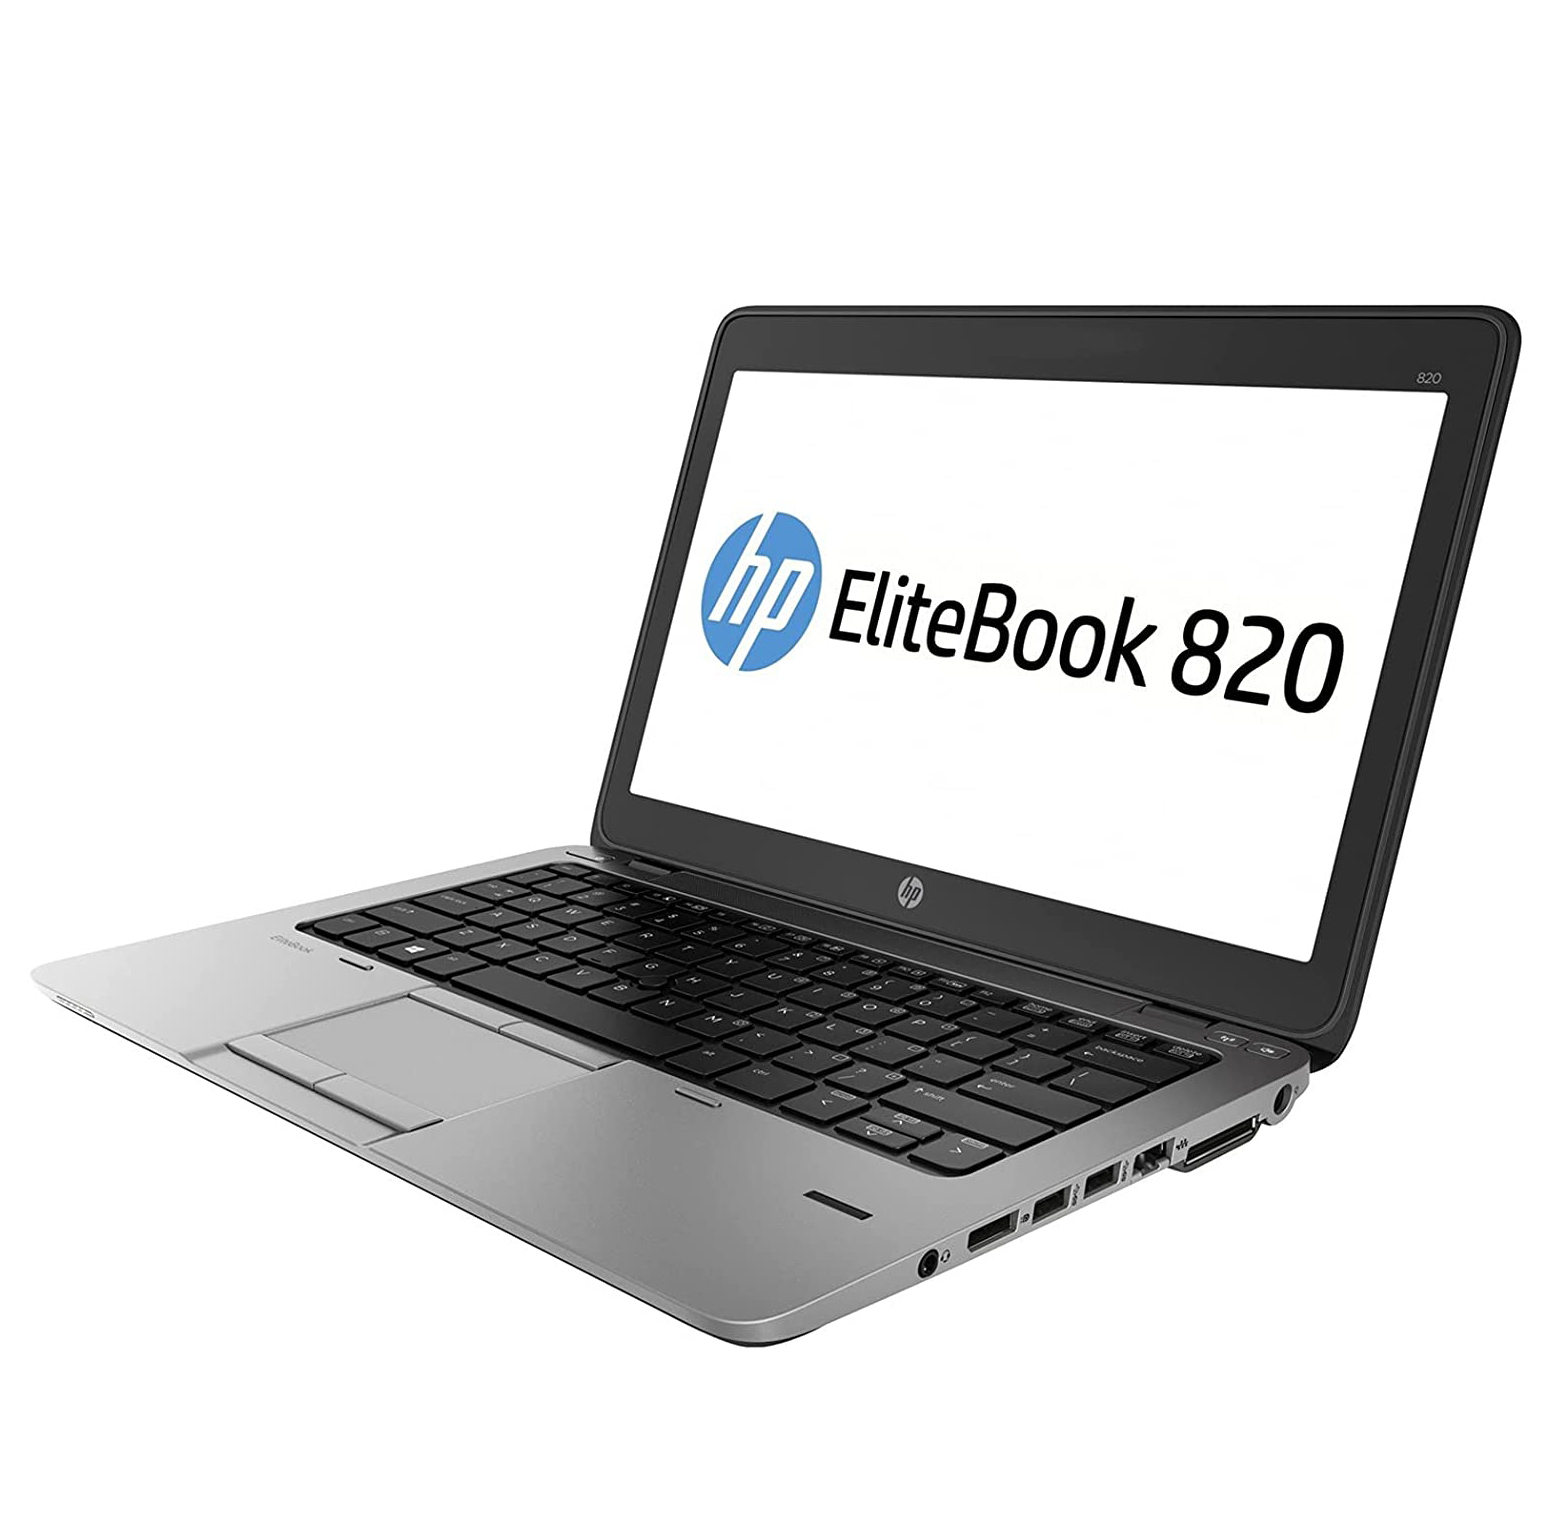 Portatil HP EliteBook 820 G2 i5 5th